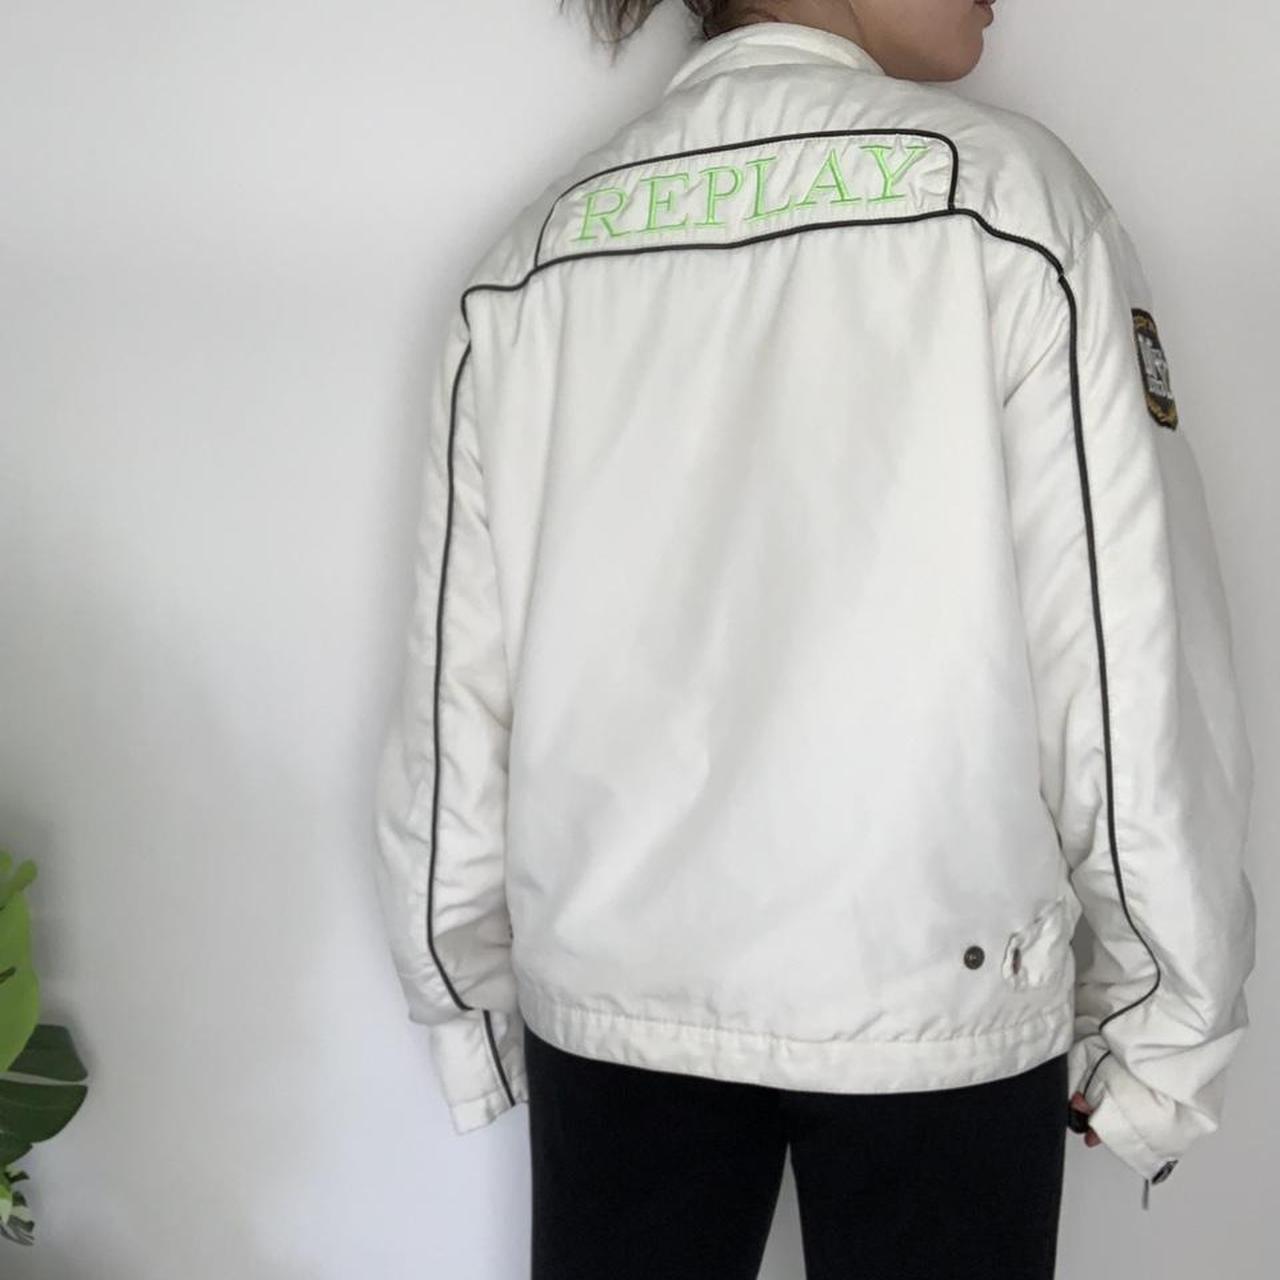 Vintage 90s Replay white zip-up racing jacket